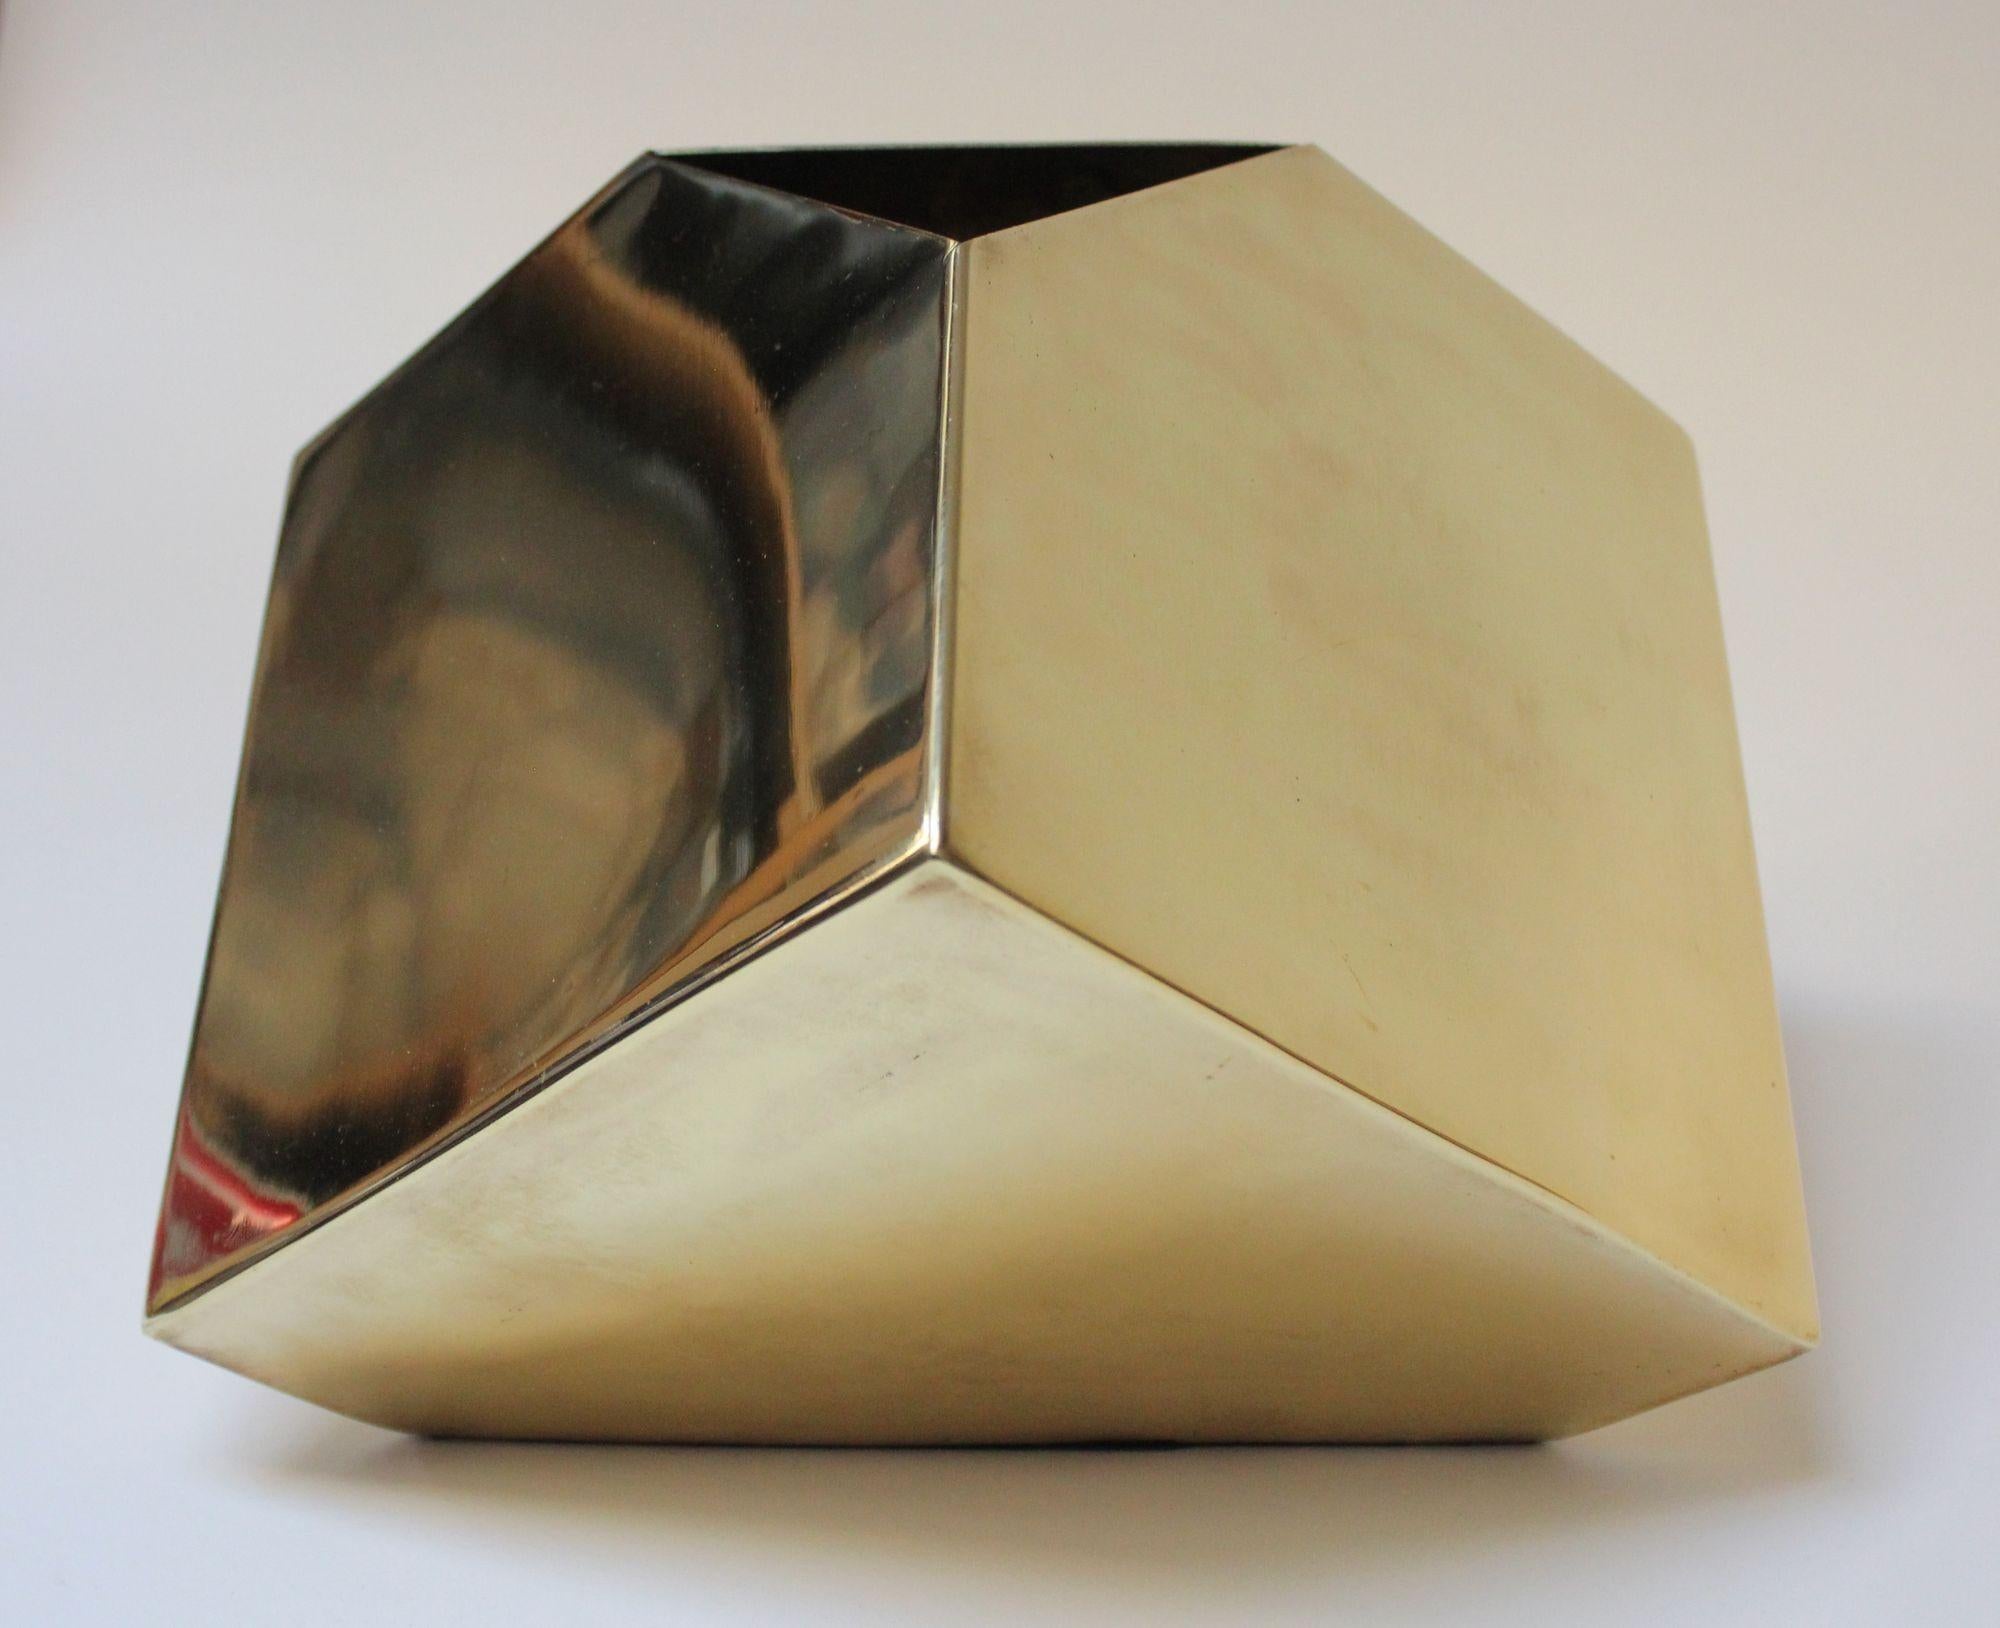 Post-Modernist Polished Brass Geometric Vase by James Johnston for Balos 1